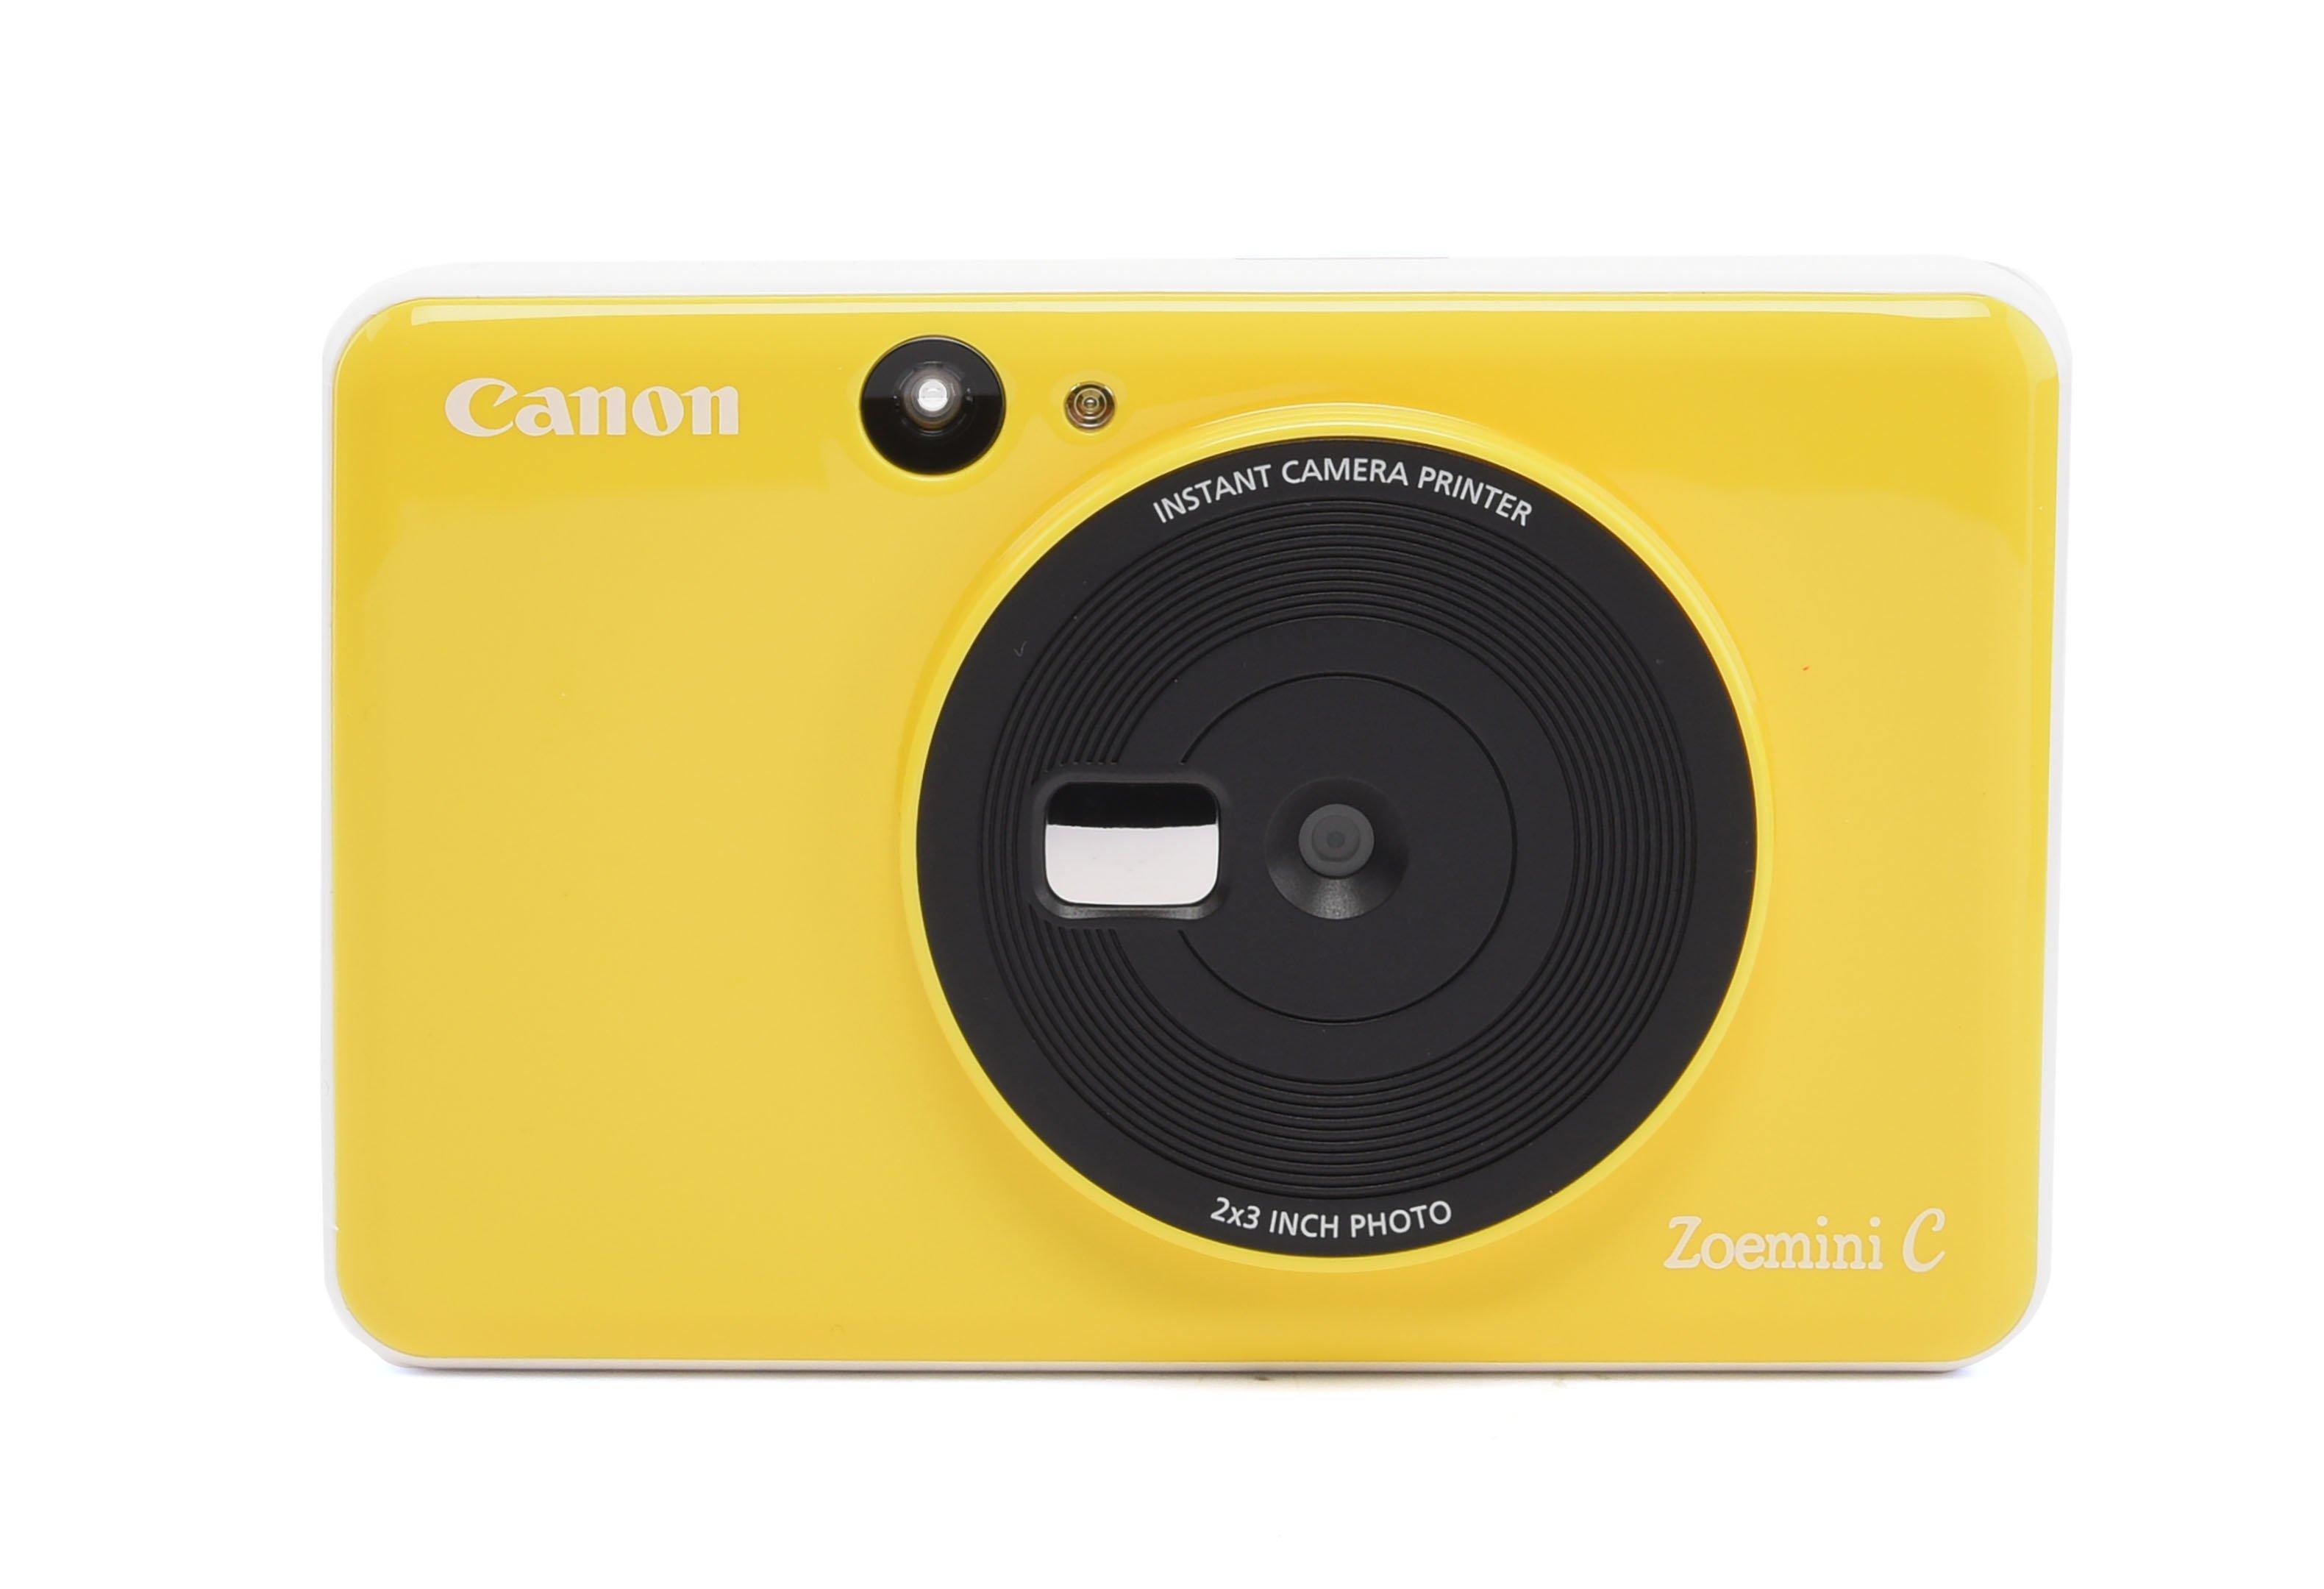 Illusion Forudsige chokolade Canon 5MP Zoemini C Instant Camera Printer,Bumble Bee Yellow - eXtra Saudi